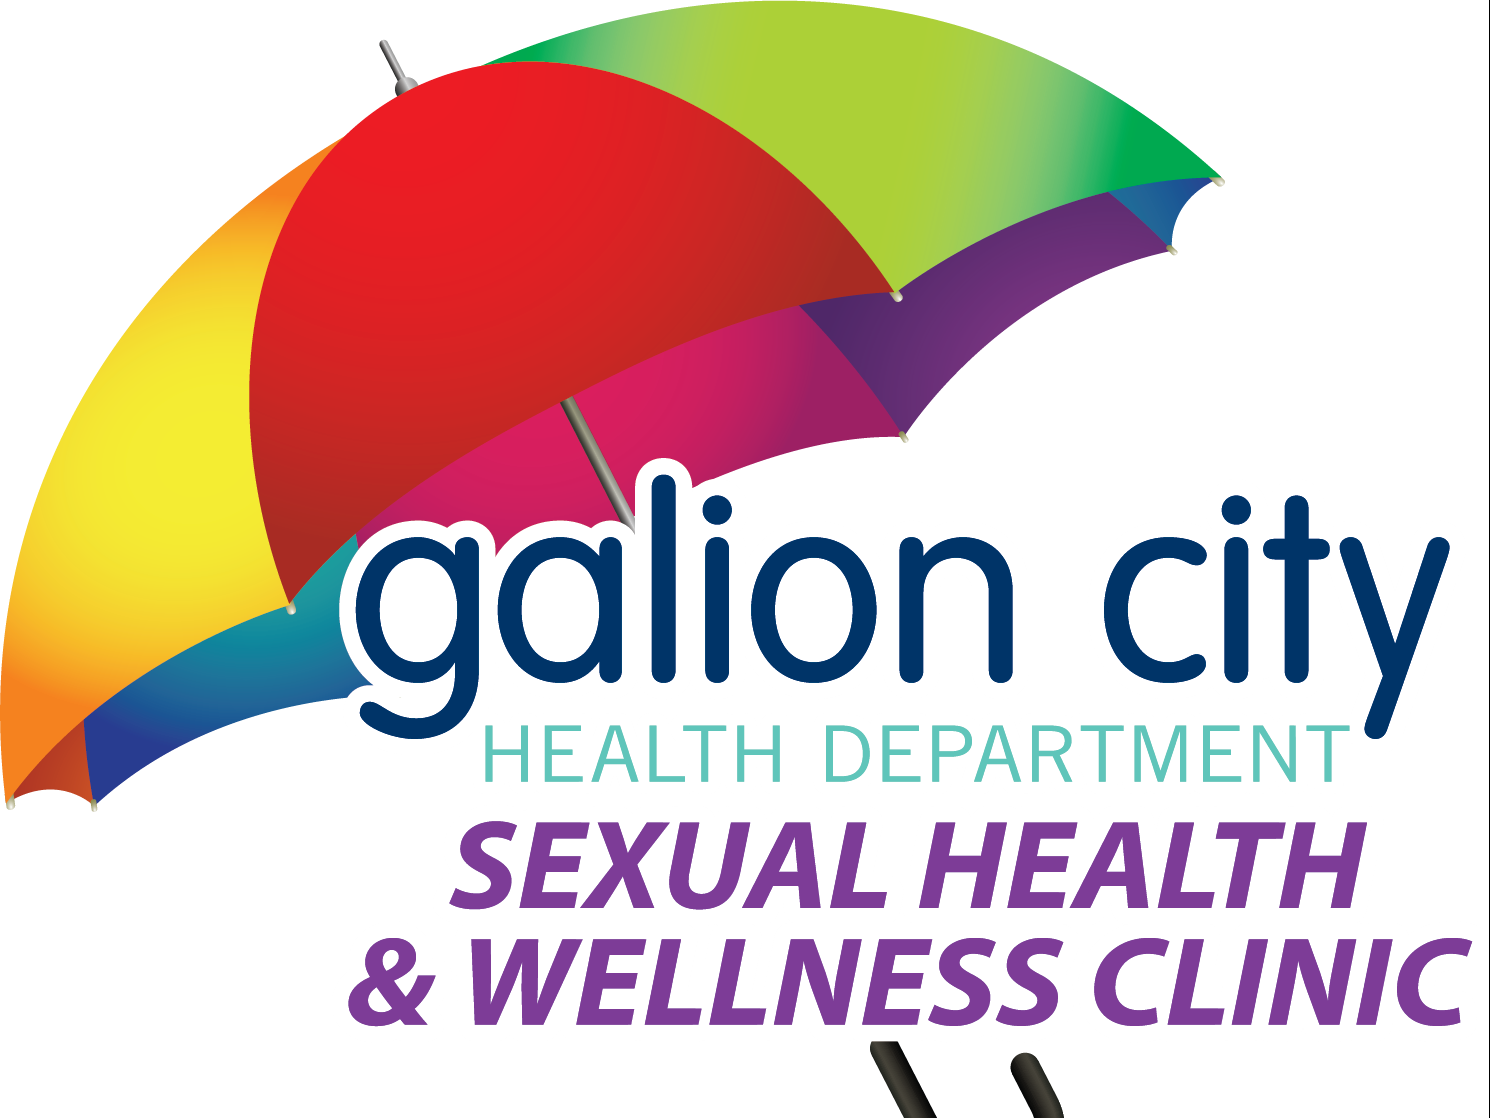 Galion city health department logo